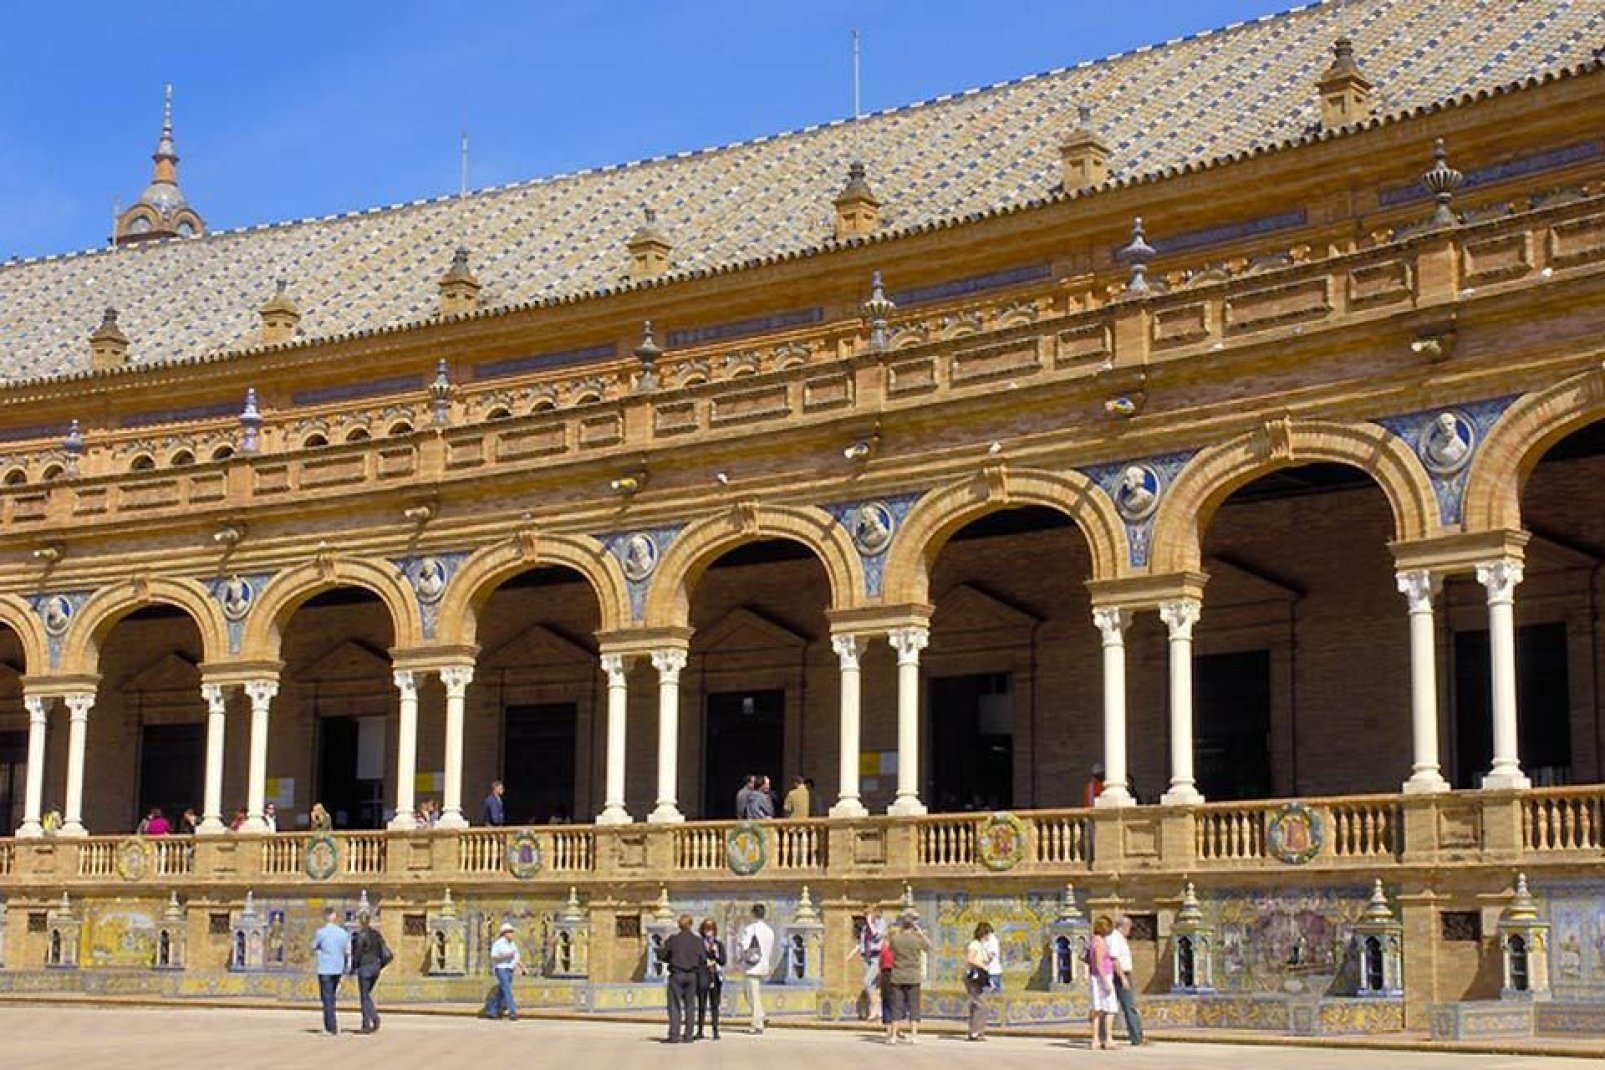 The façade of Seville's town hall, located on the Plaza de España